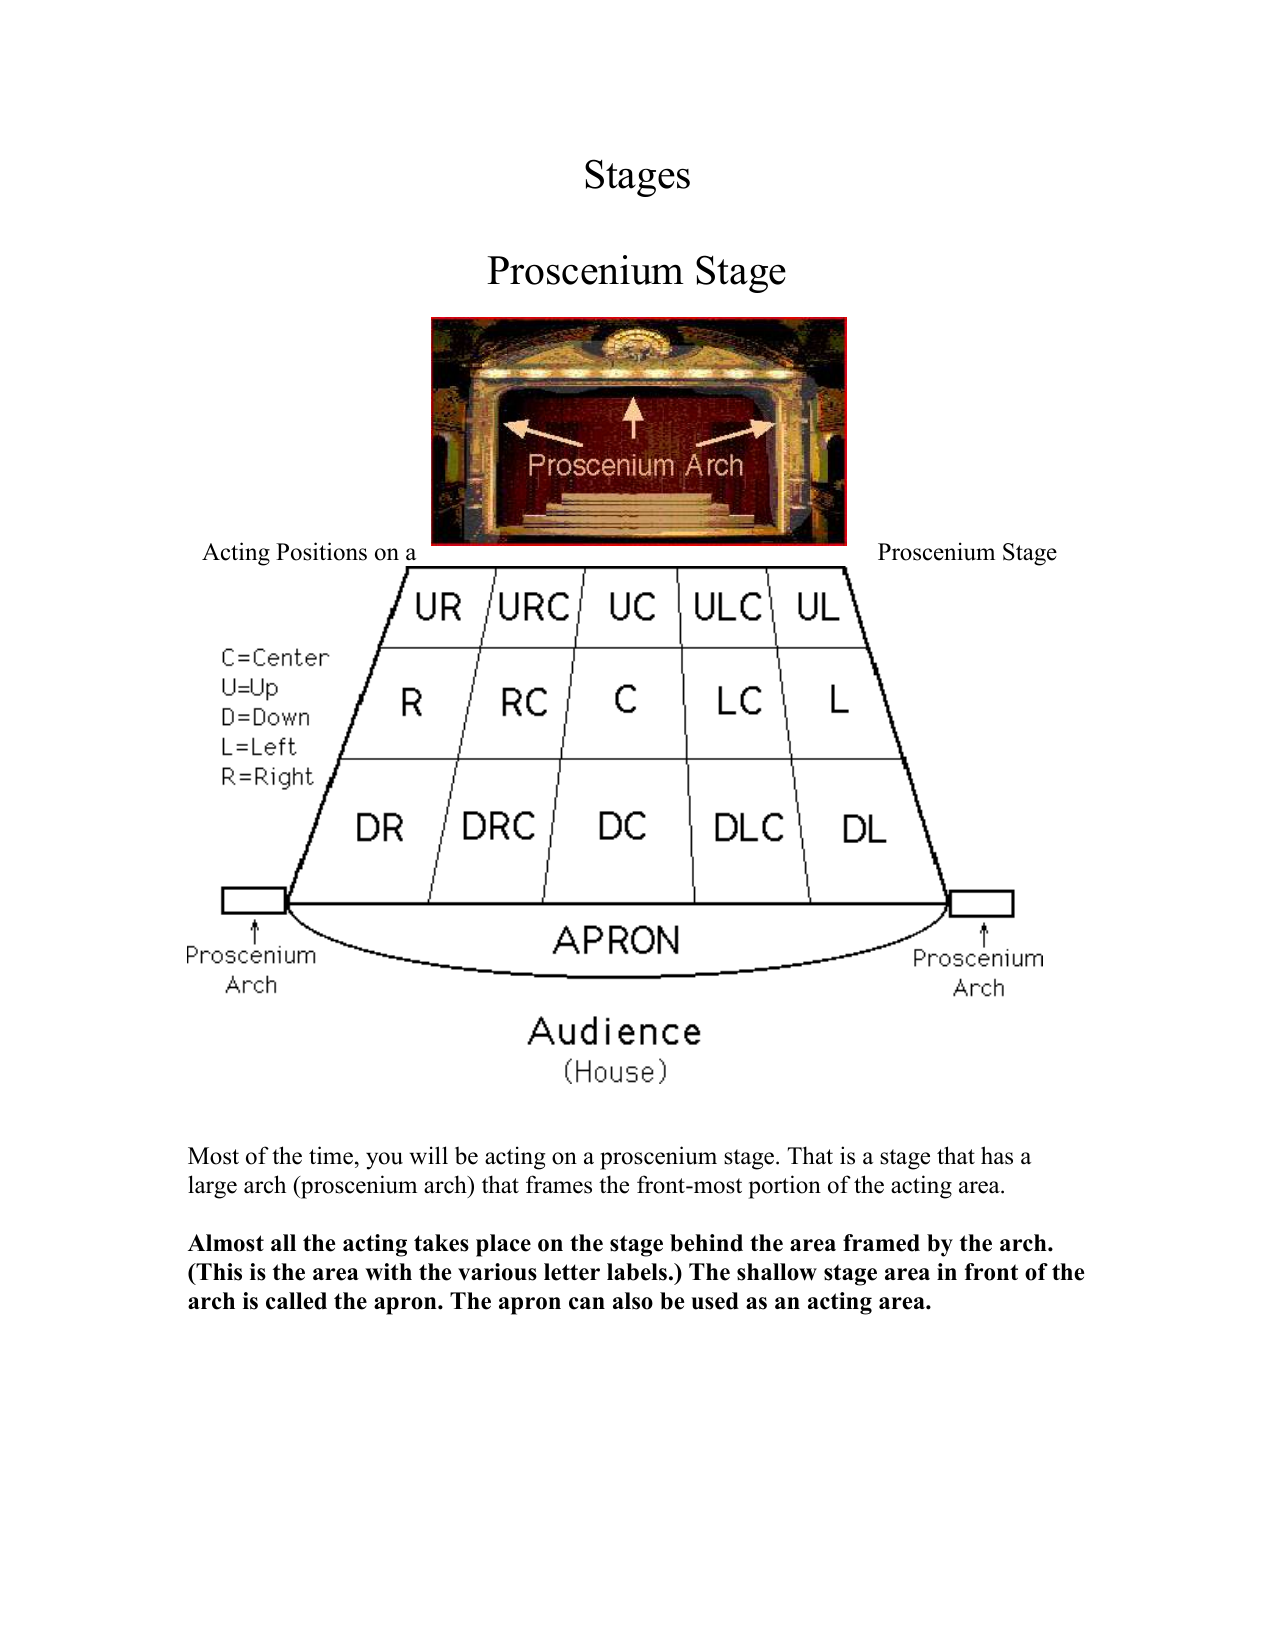 proscenium stage history